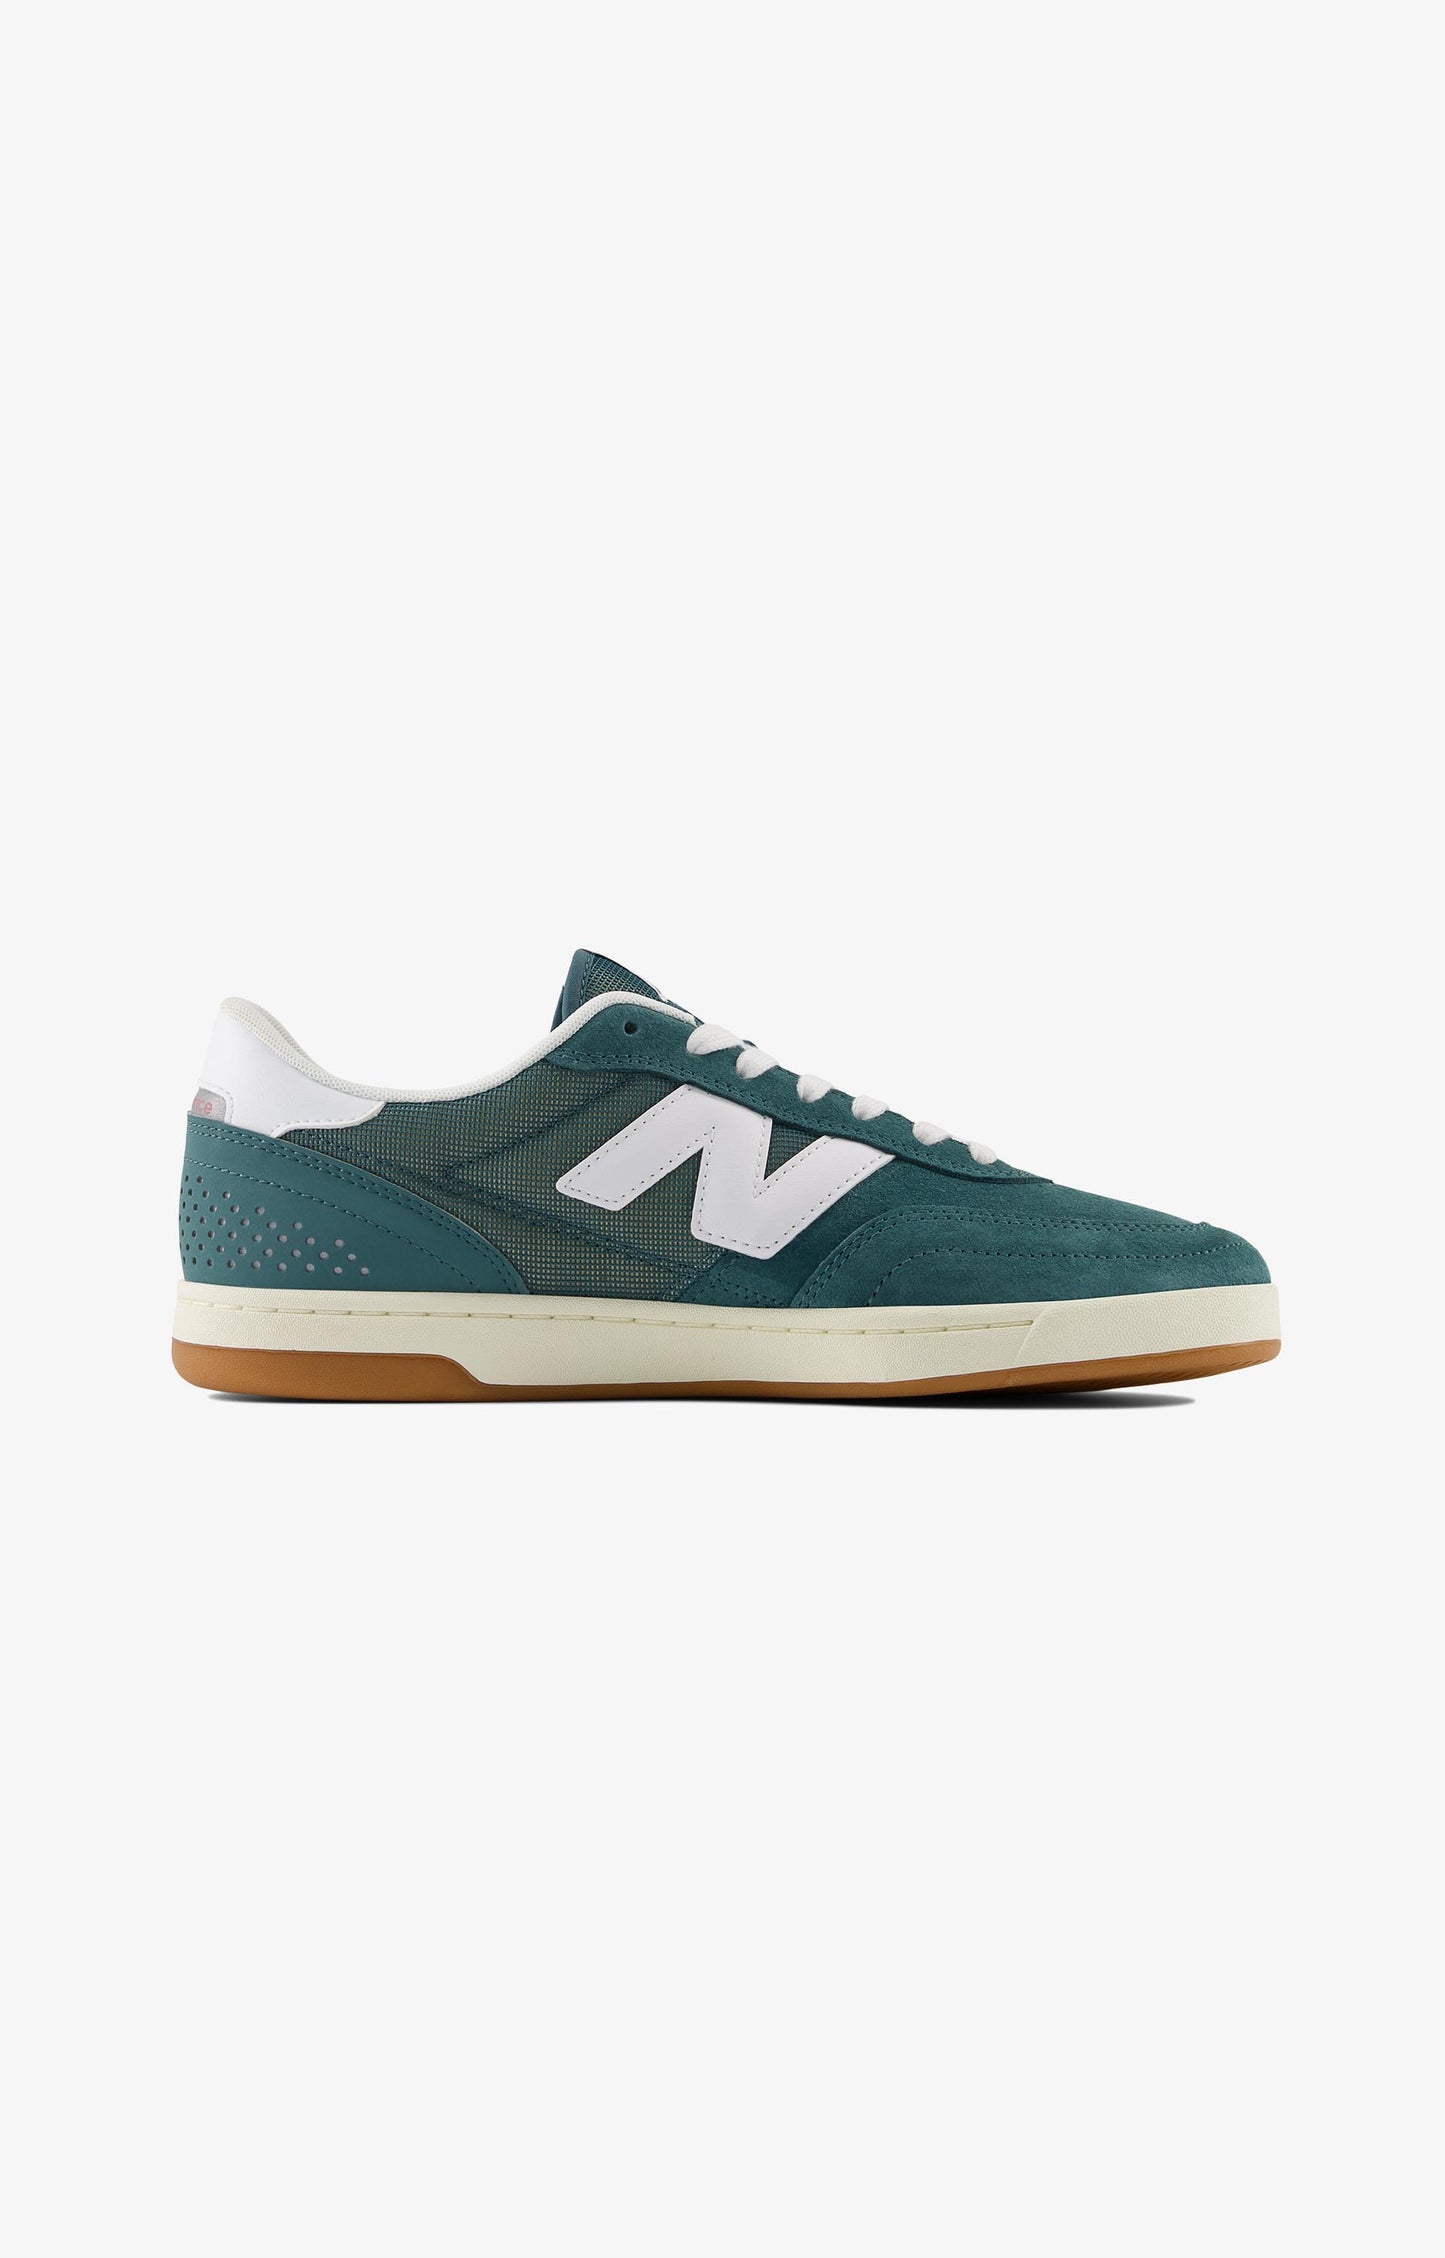 New Balance Numeric NM440FGR V2 Shoe, Green/White